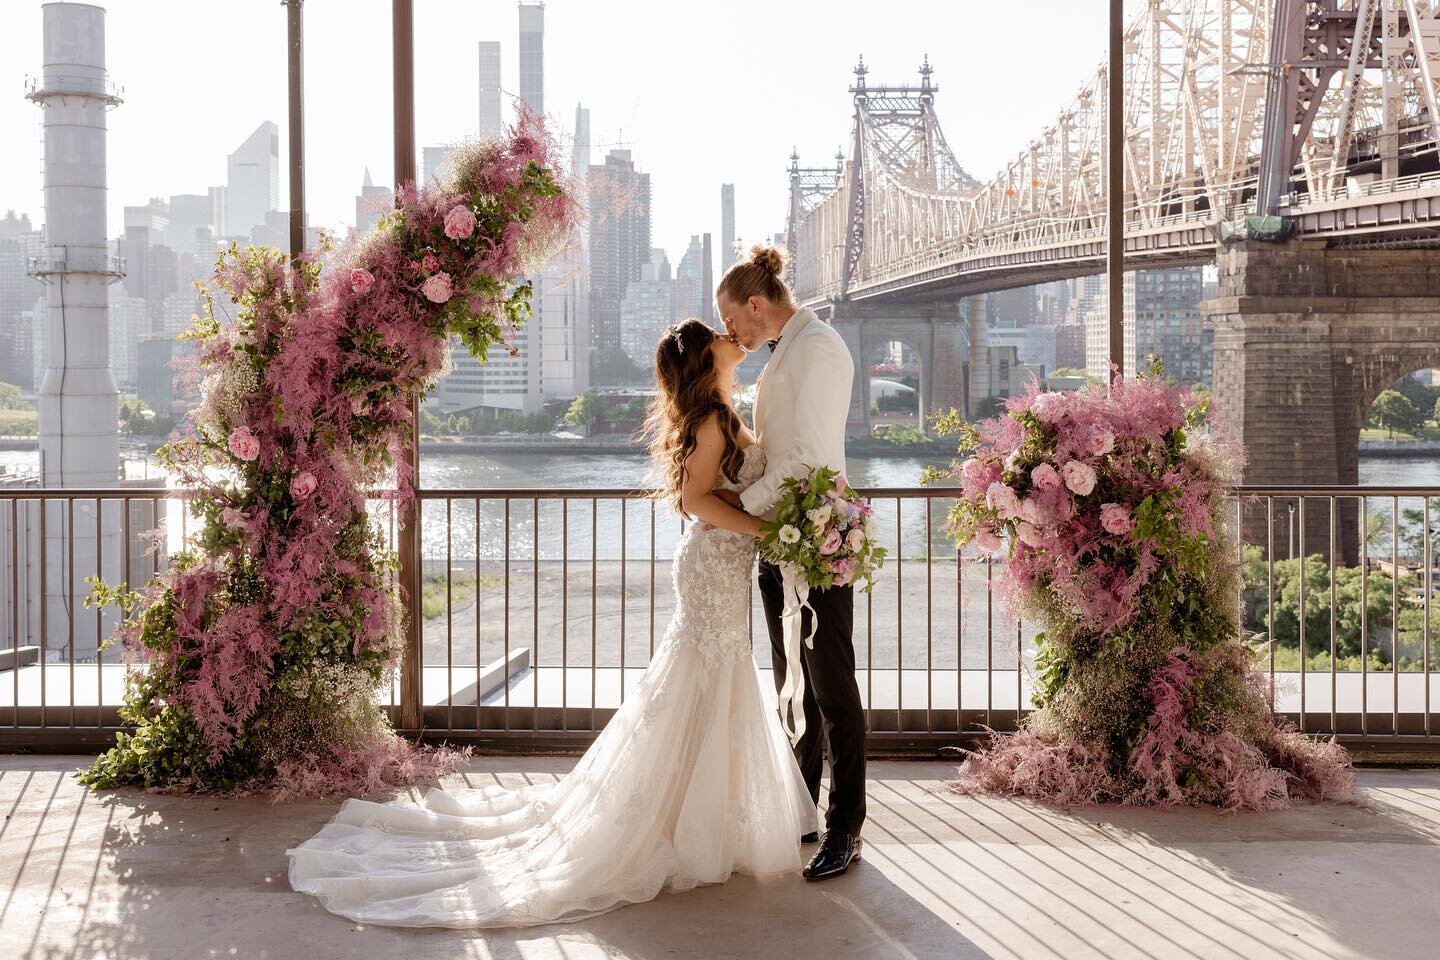 Linda &amp; Nich, New York.
This wedding was a TOTAL dream.
.
#heartandcolour #destinationwedding #destinationweddingphotographer #nyc #nycwedding #nycweddingphotographer #newyorkwedding #pejykashevents #newyorkweddingphotographer #ravelhotel #ravelh